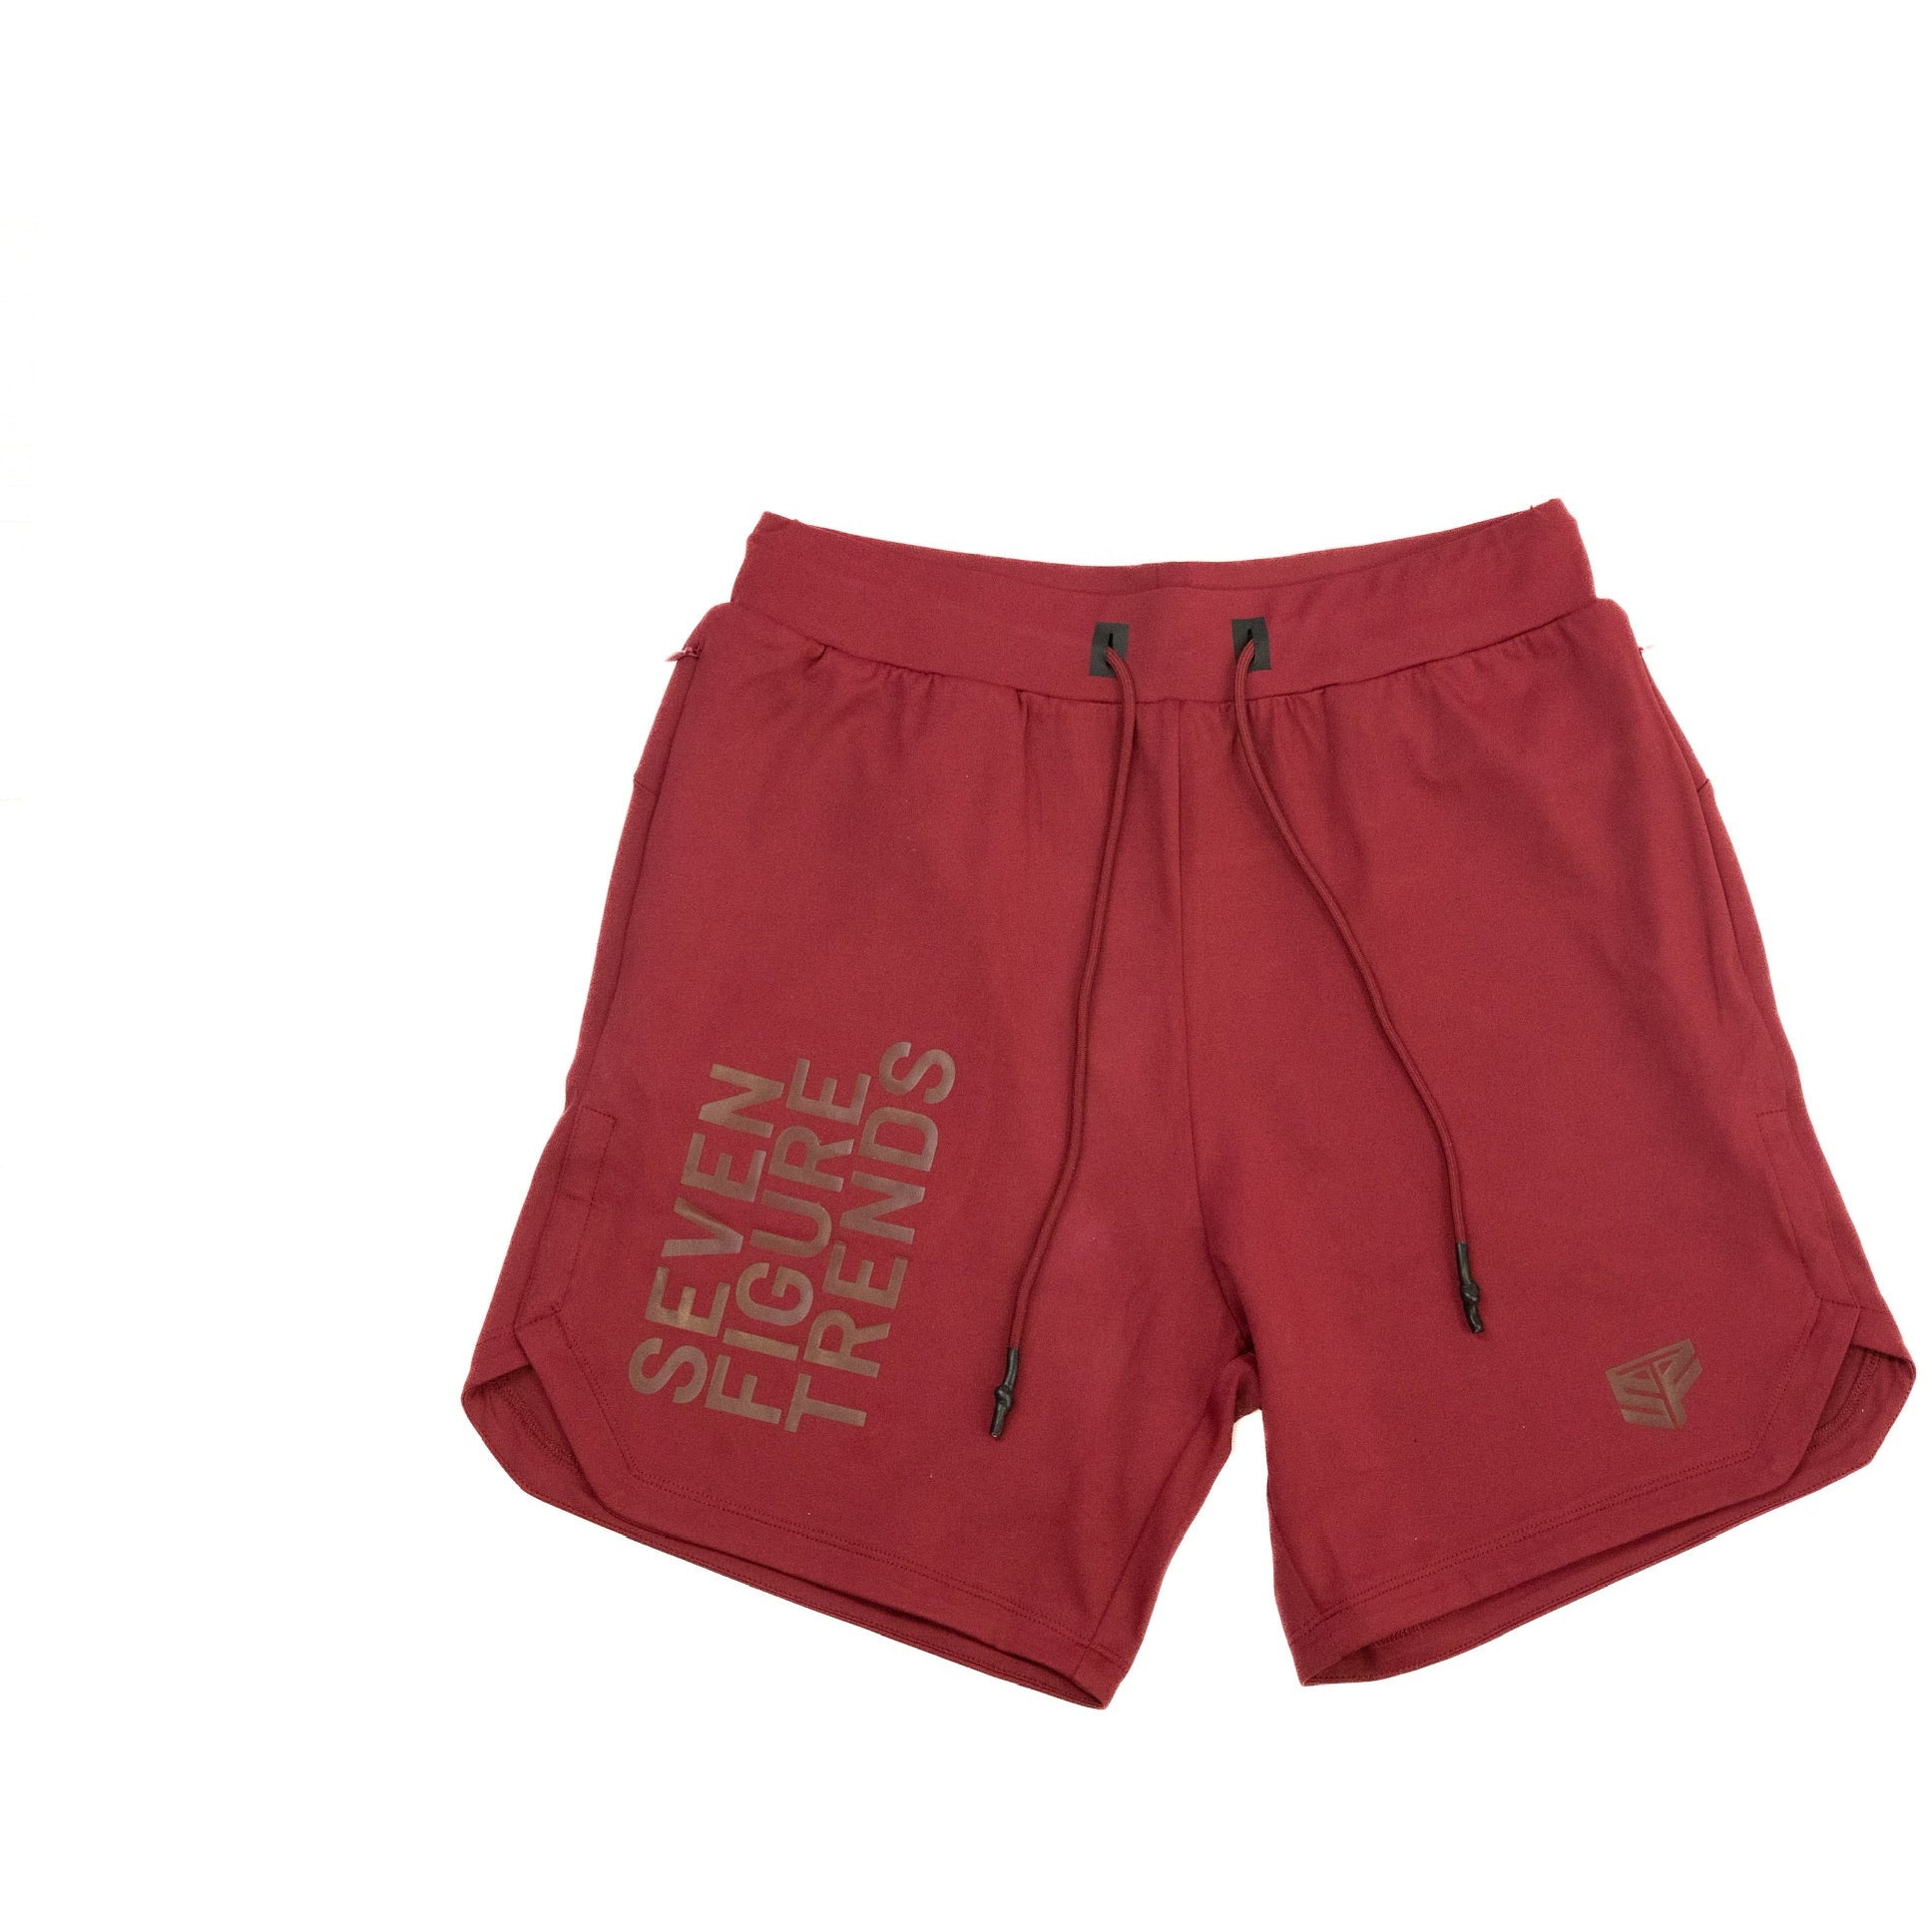 Cranberry Gym Shorts